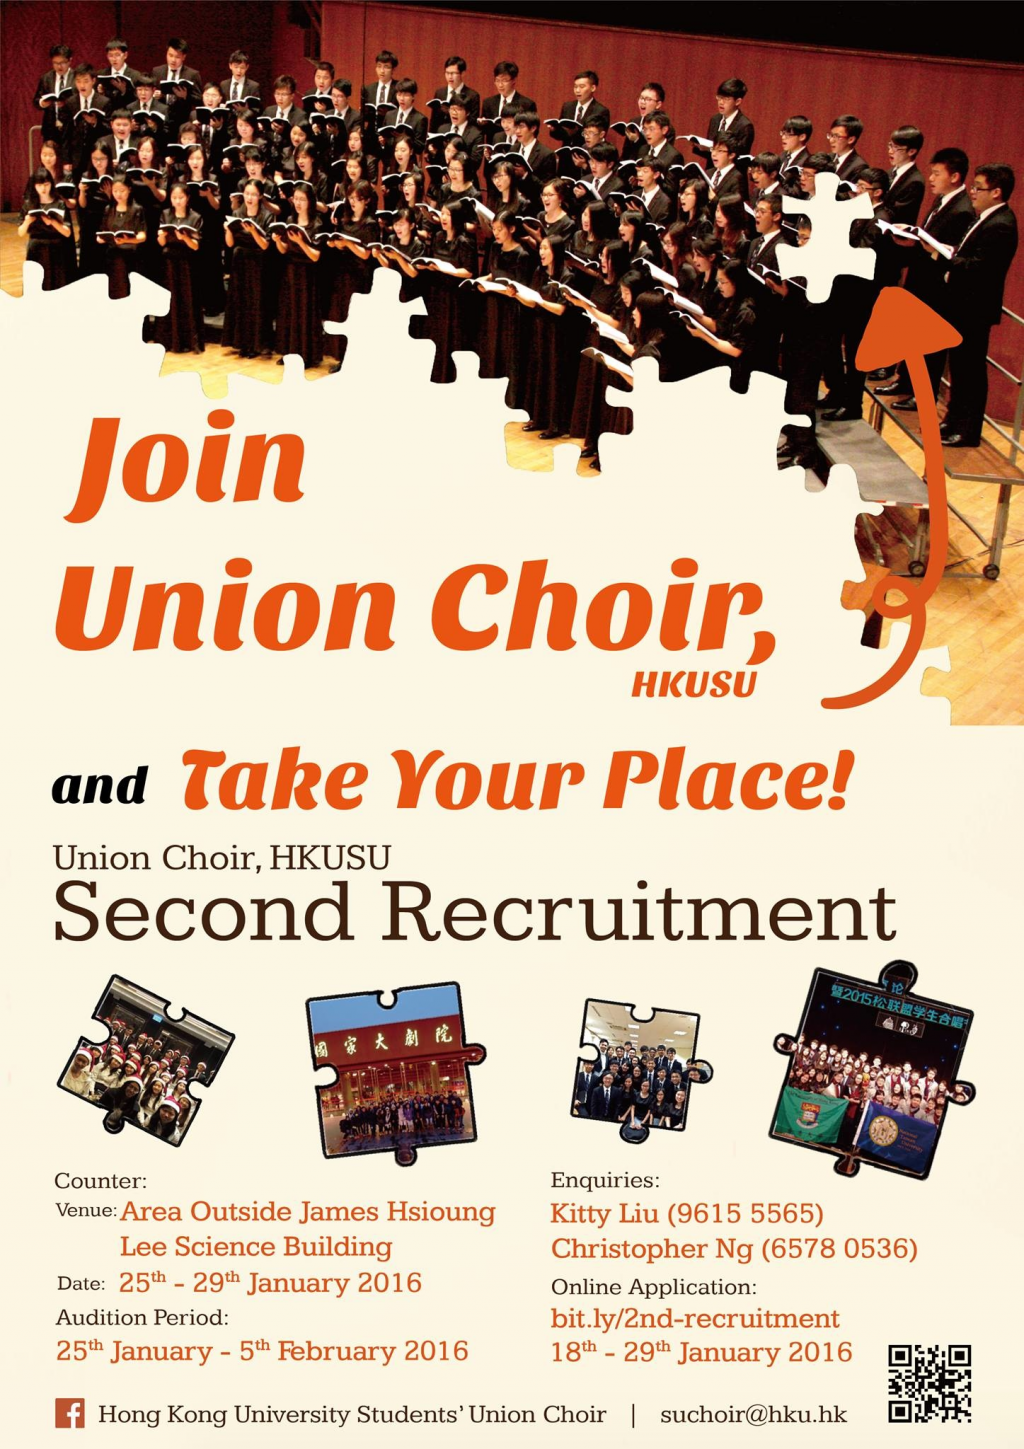 Second Recruitment of Union Choir, HKUSU